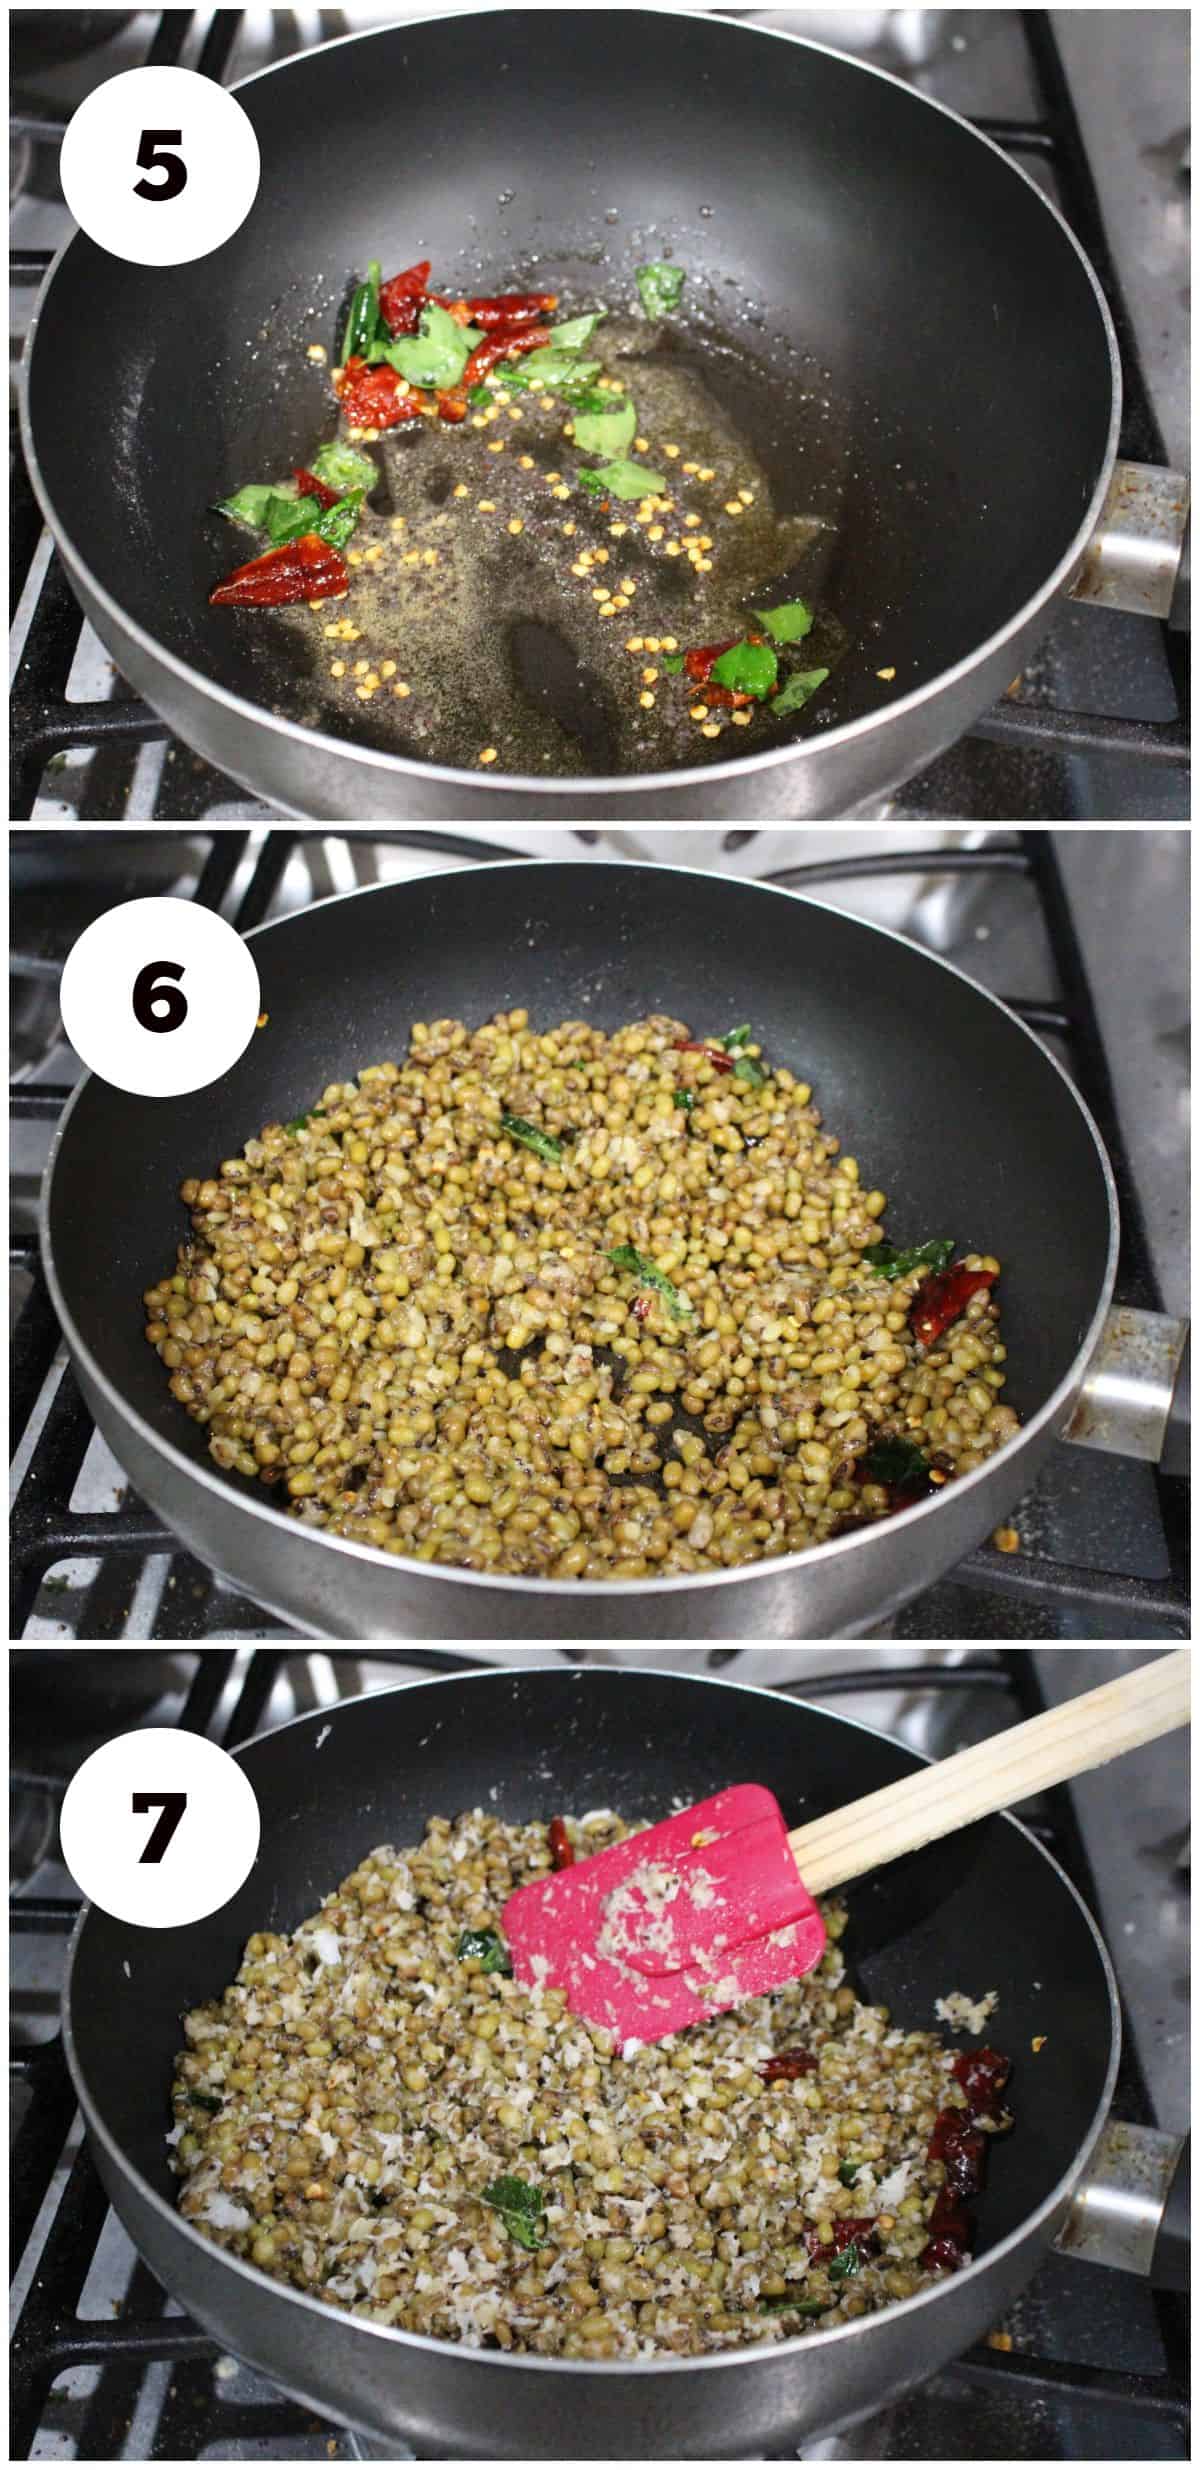 Process shot showing seasoning and cooking the moong bean